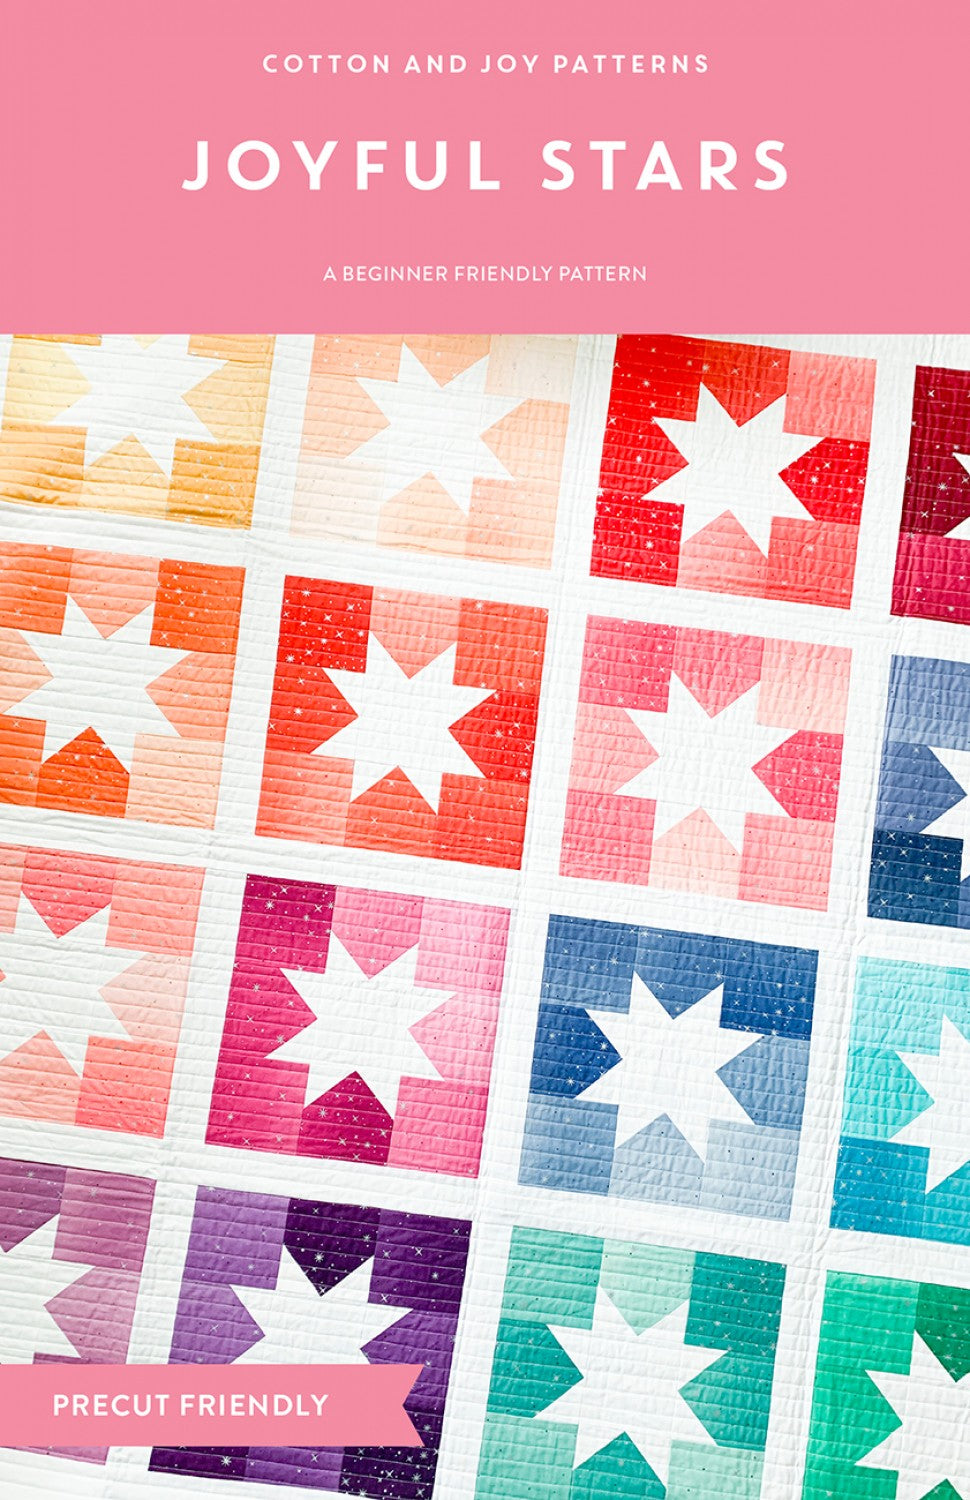 Joyful Stars by Cotton & Joy - PAPER Pattern